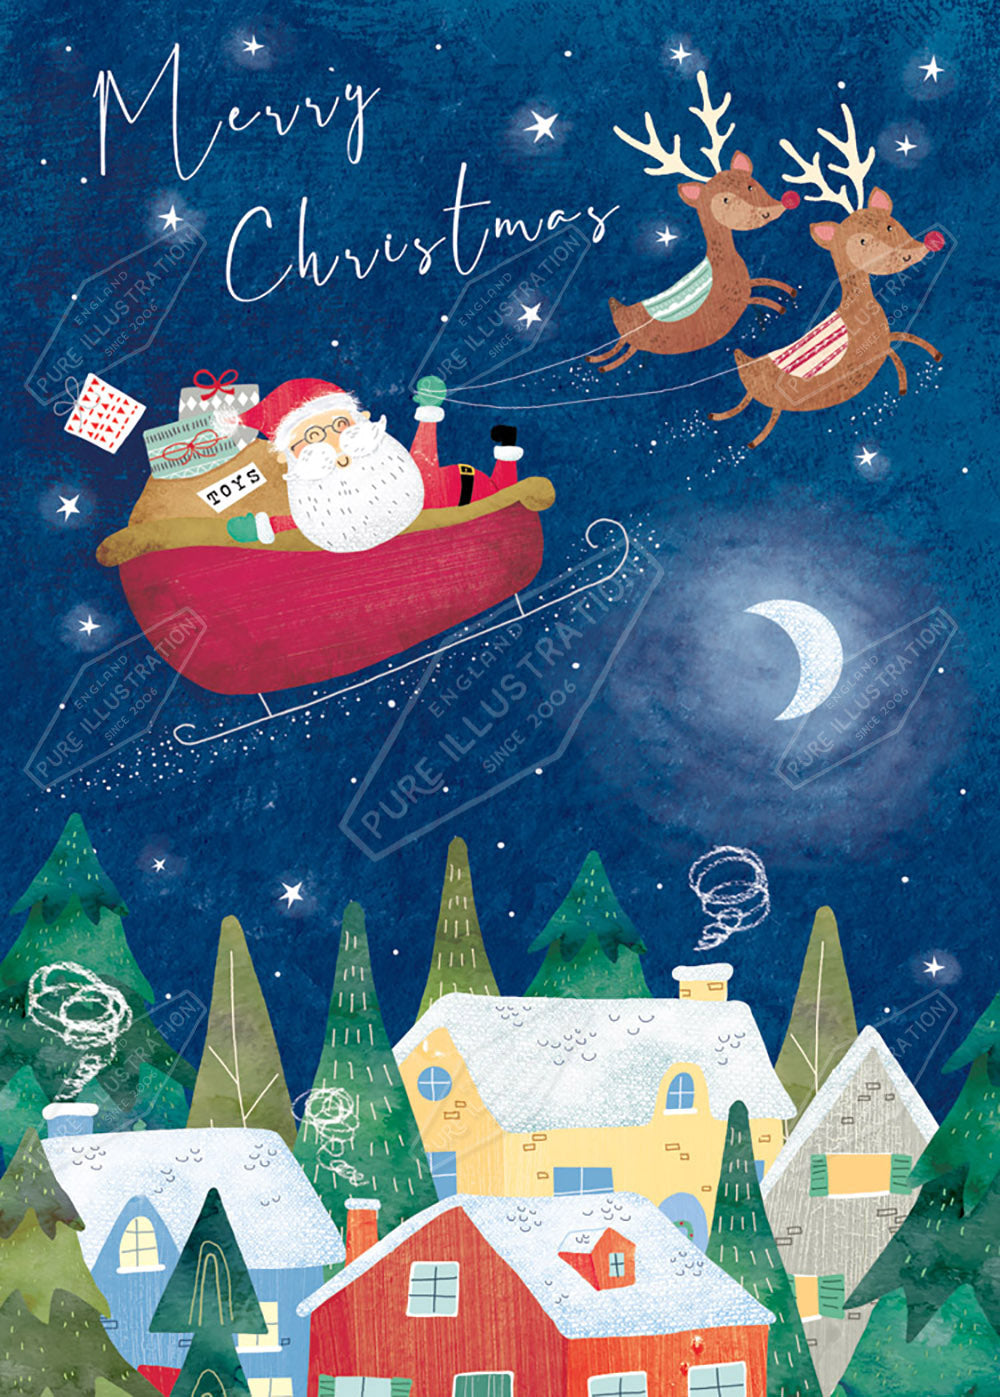 Santa Delivering Presents Illustration by Cory Reid for Pure Art Licensing Agency & Surface Design Studio